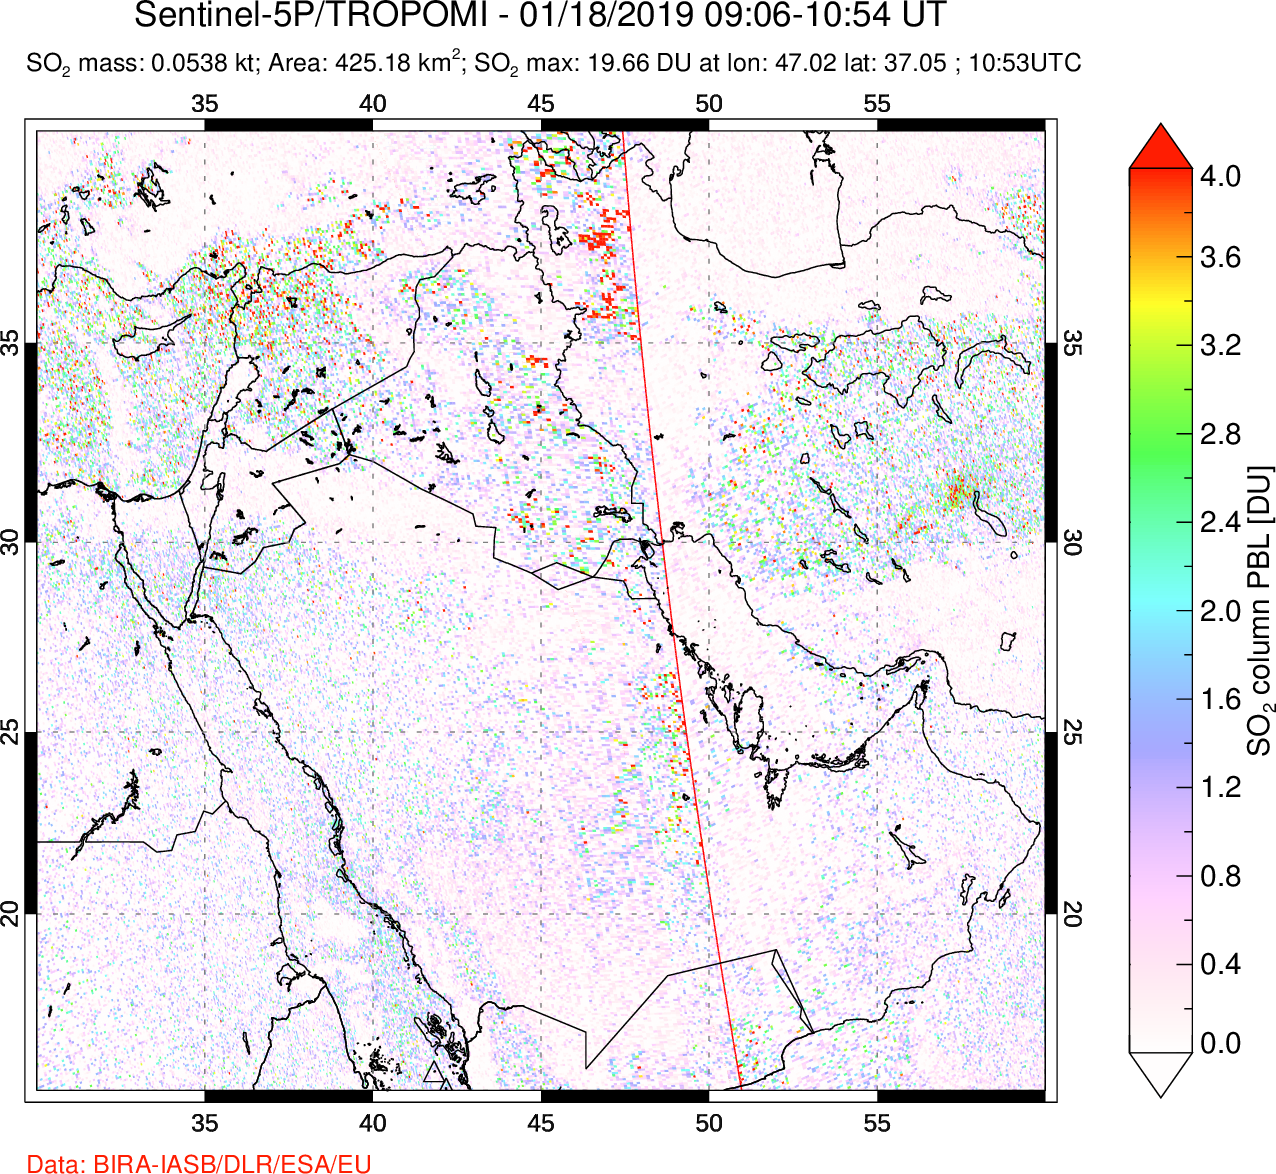 A sulfur dioxide image over Middle East on Jan 18, 2019.